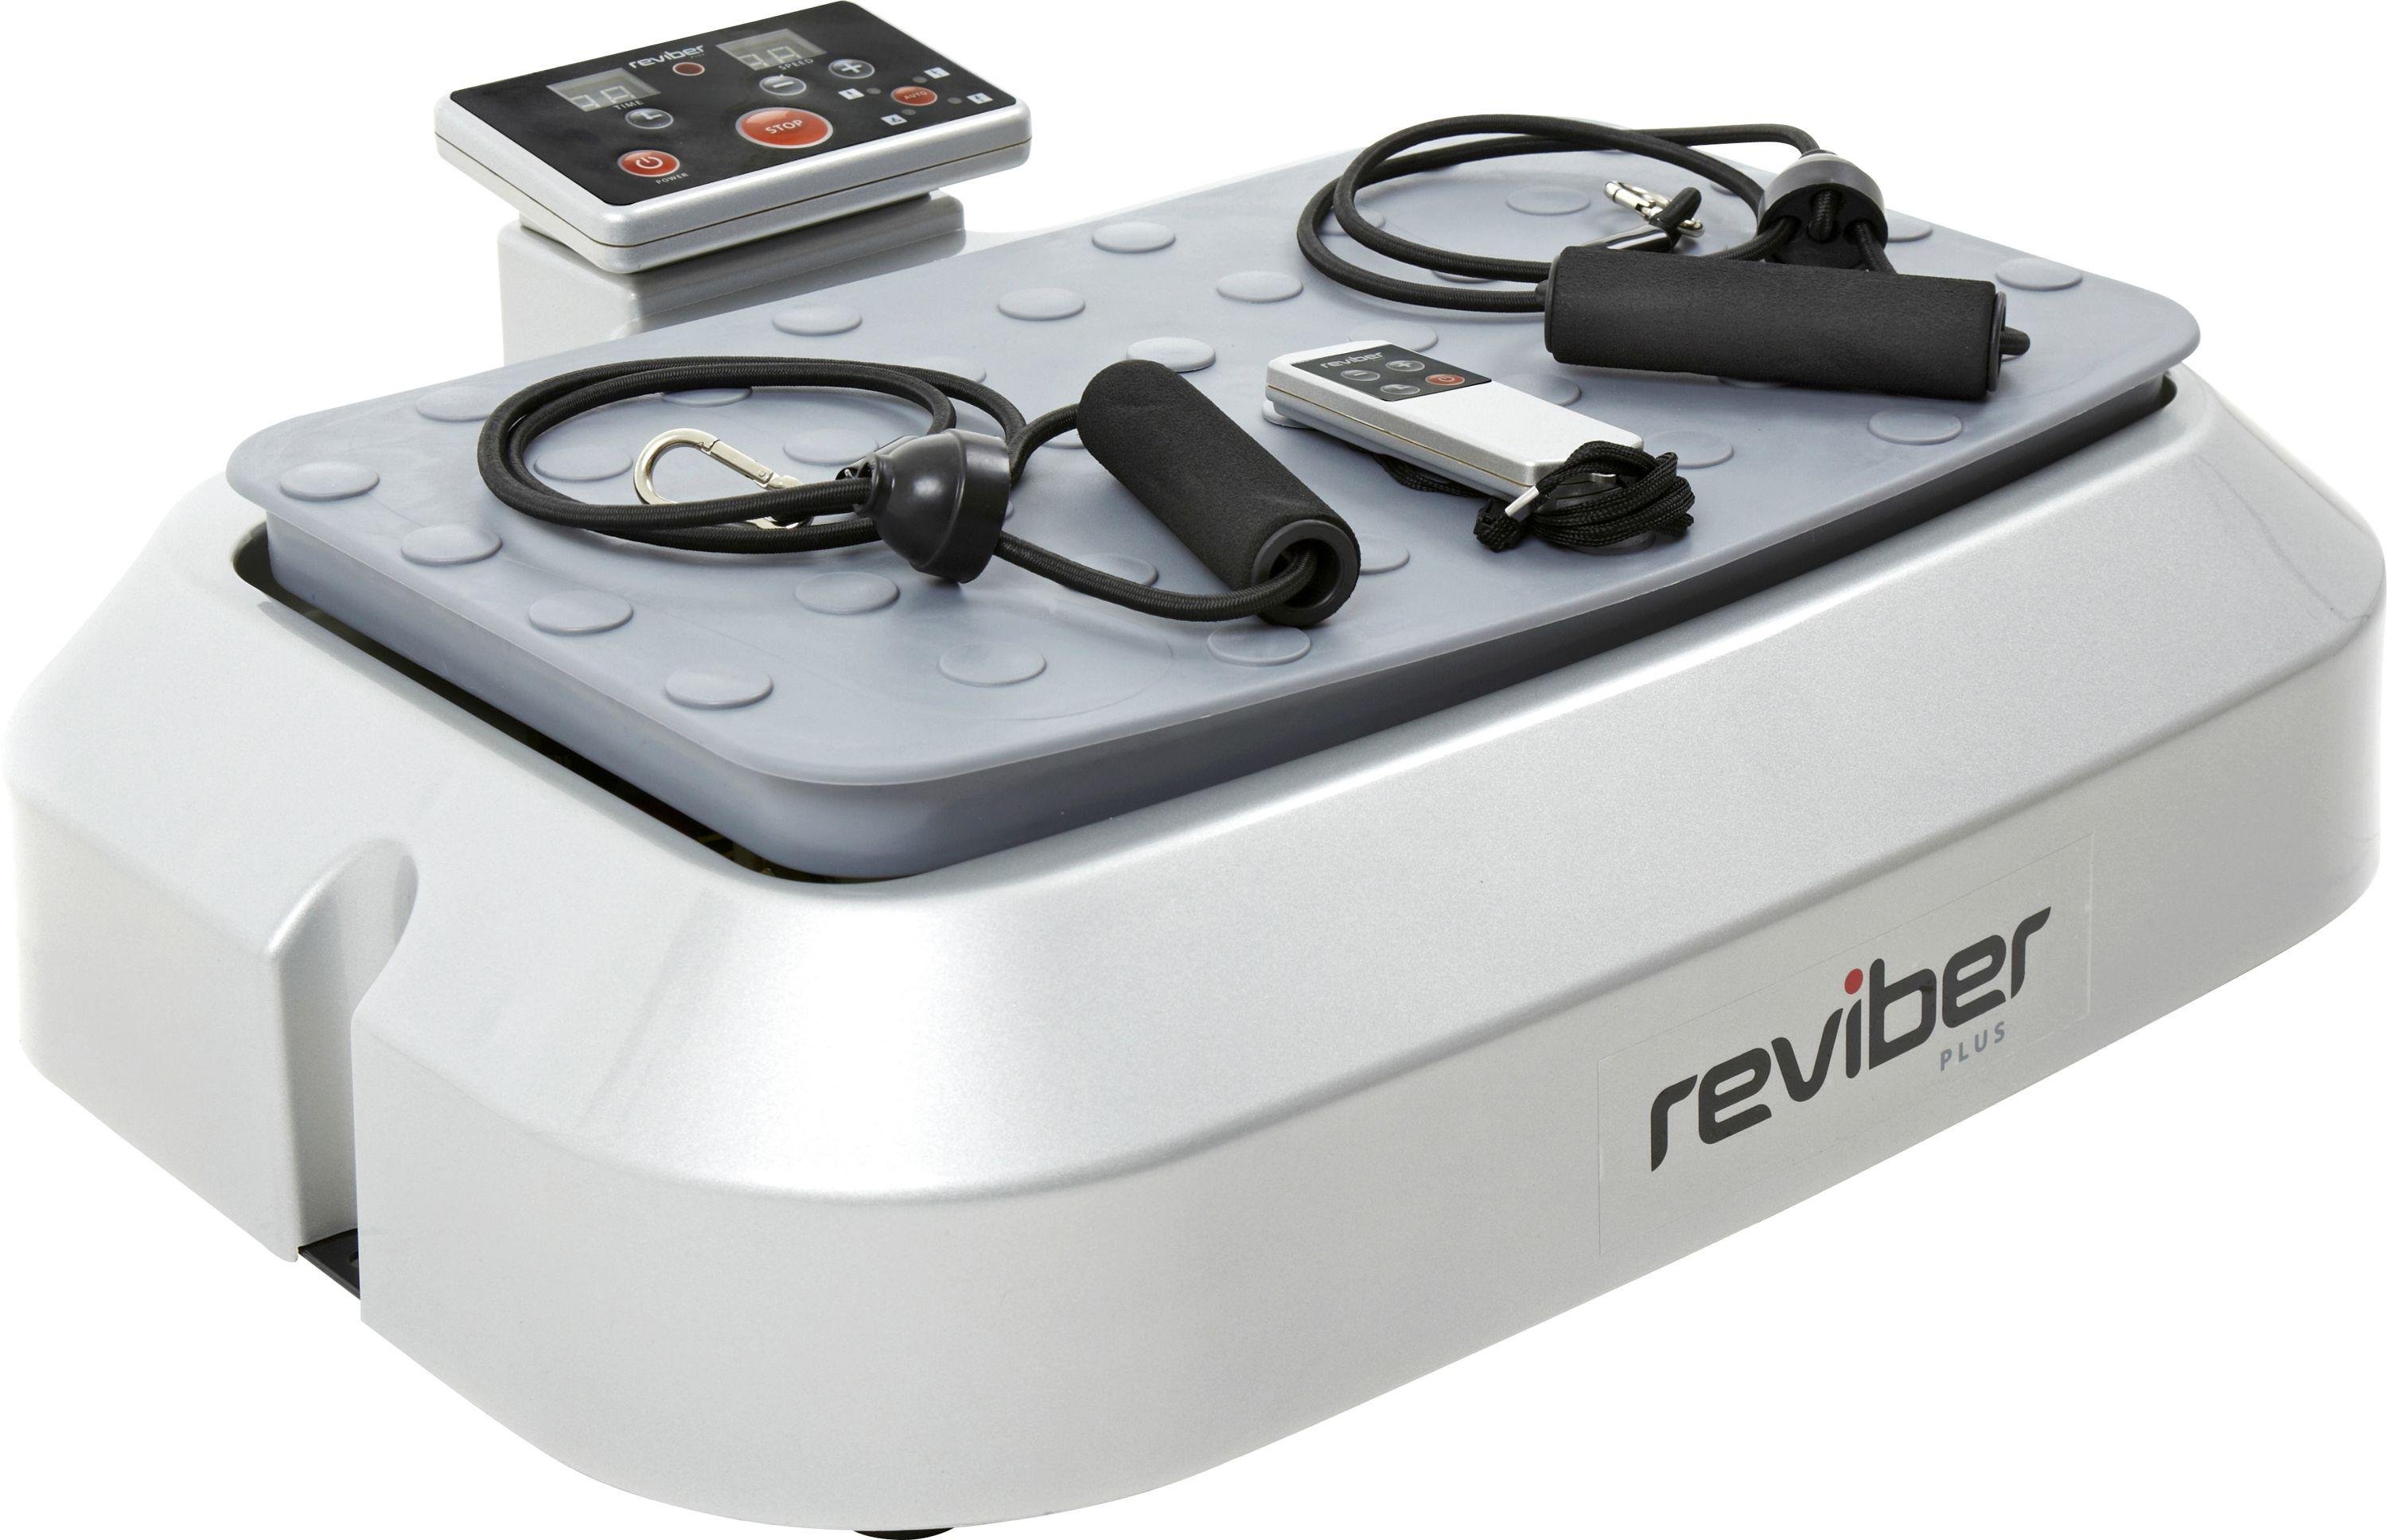 Reviber Plus Vibration Plate Exerciser